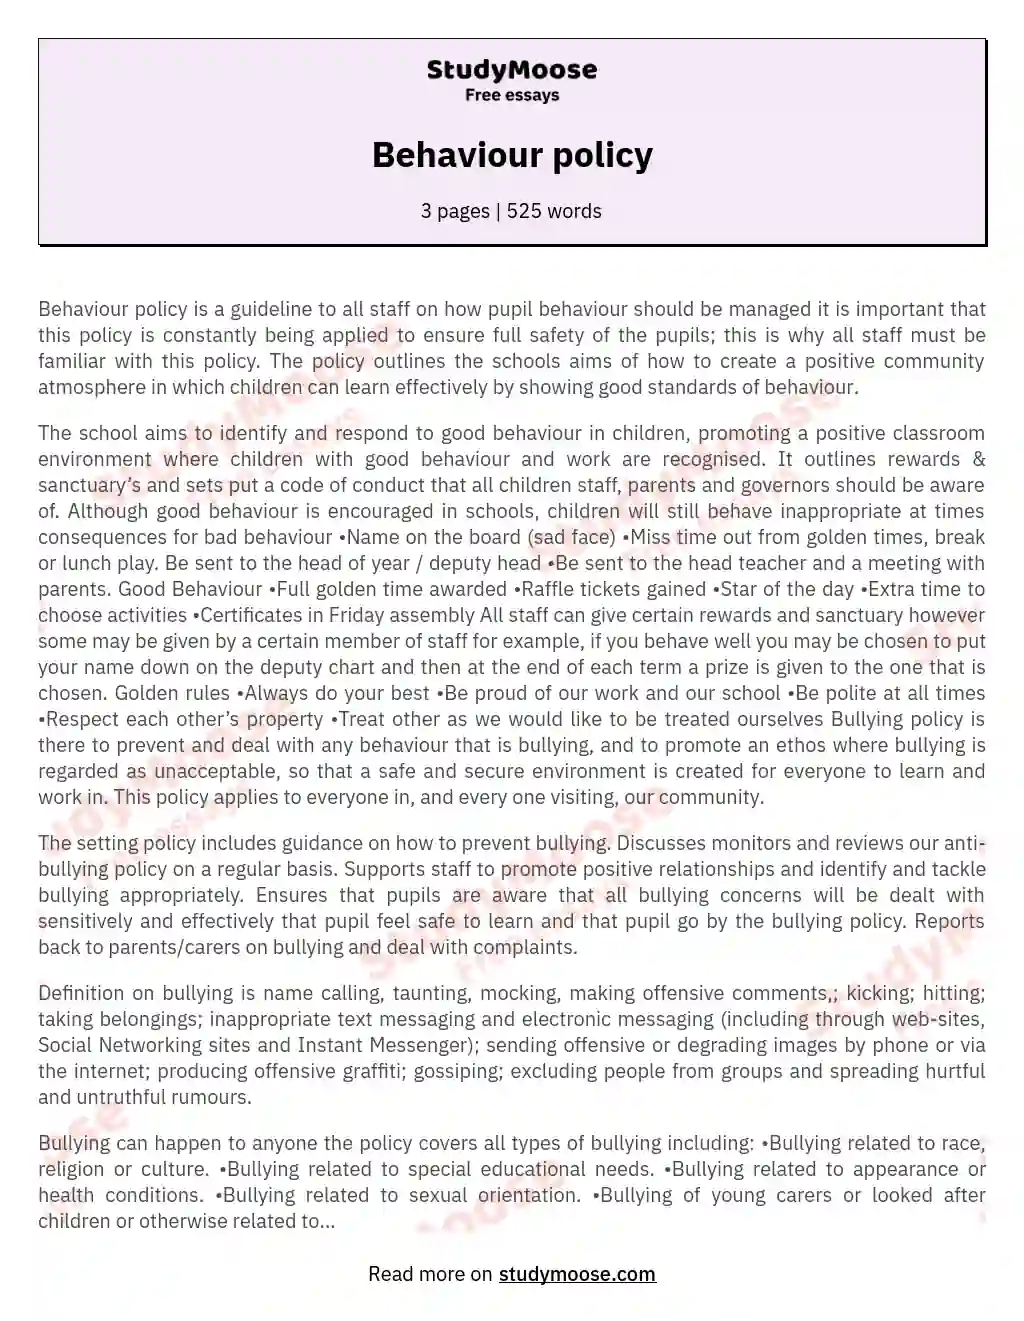 Behaviour policy essay